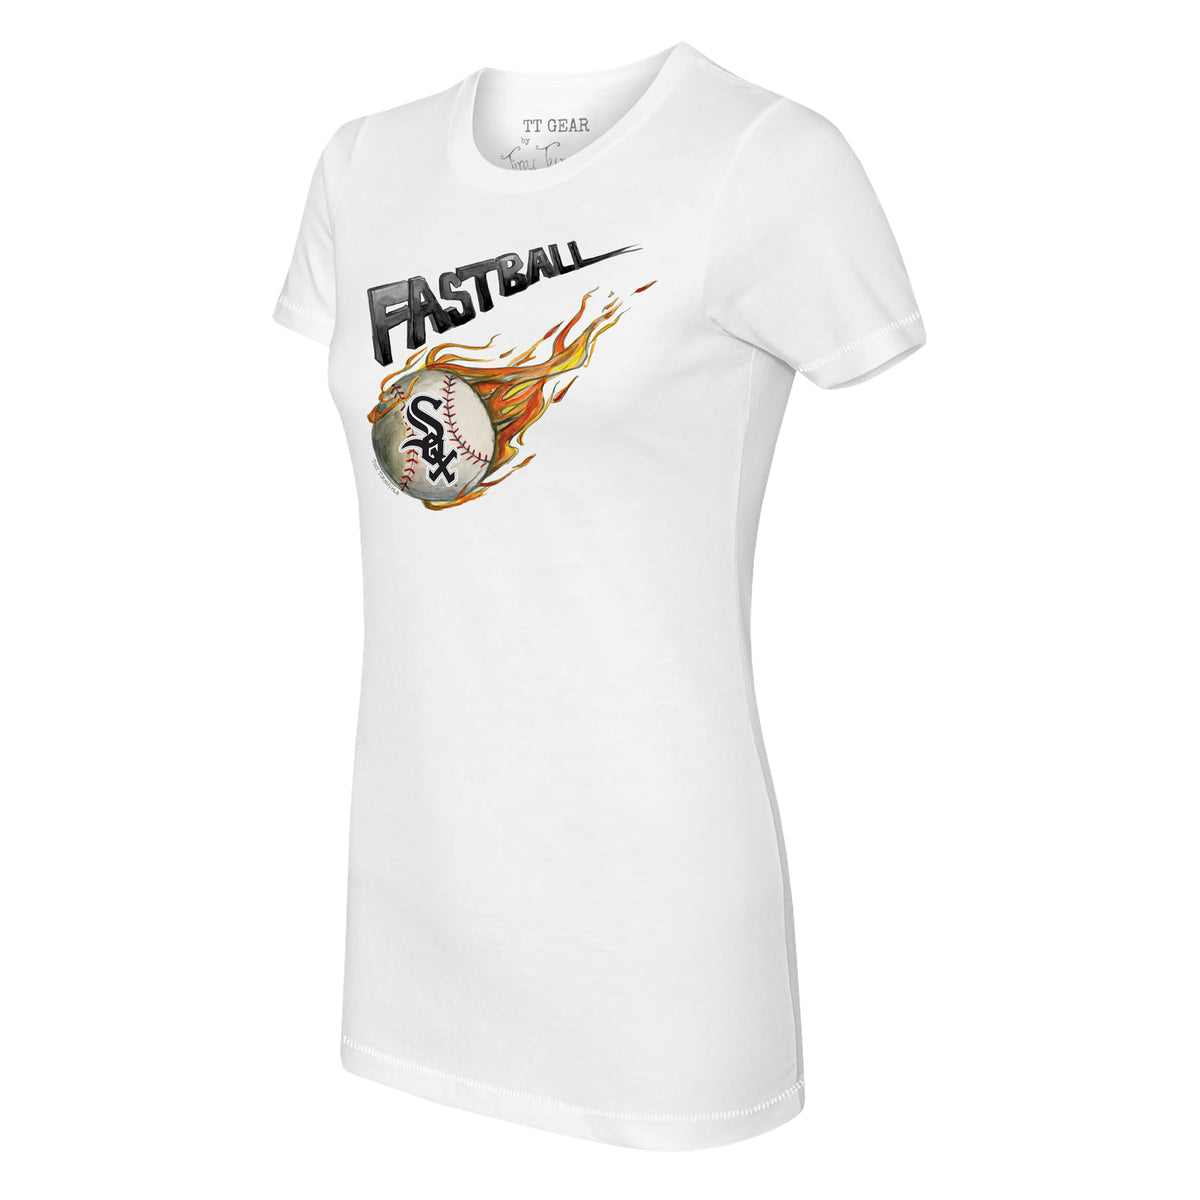 Chicago White Sox Fastball Tee Shirt